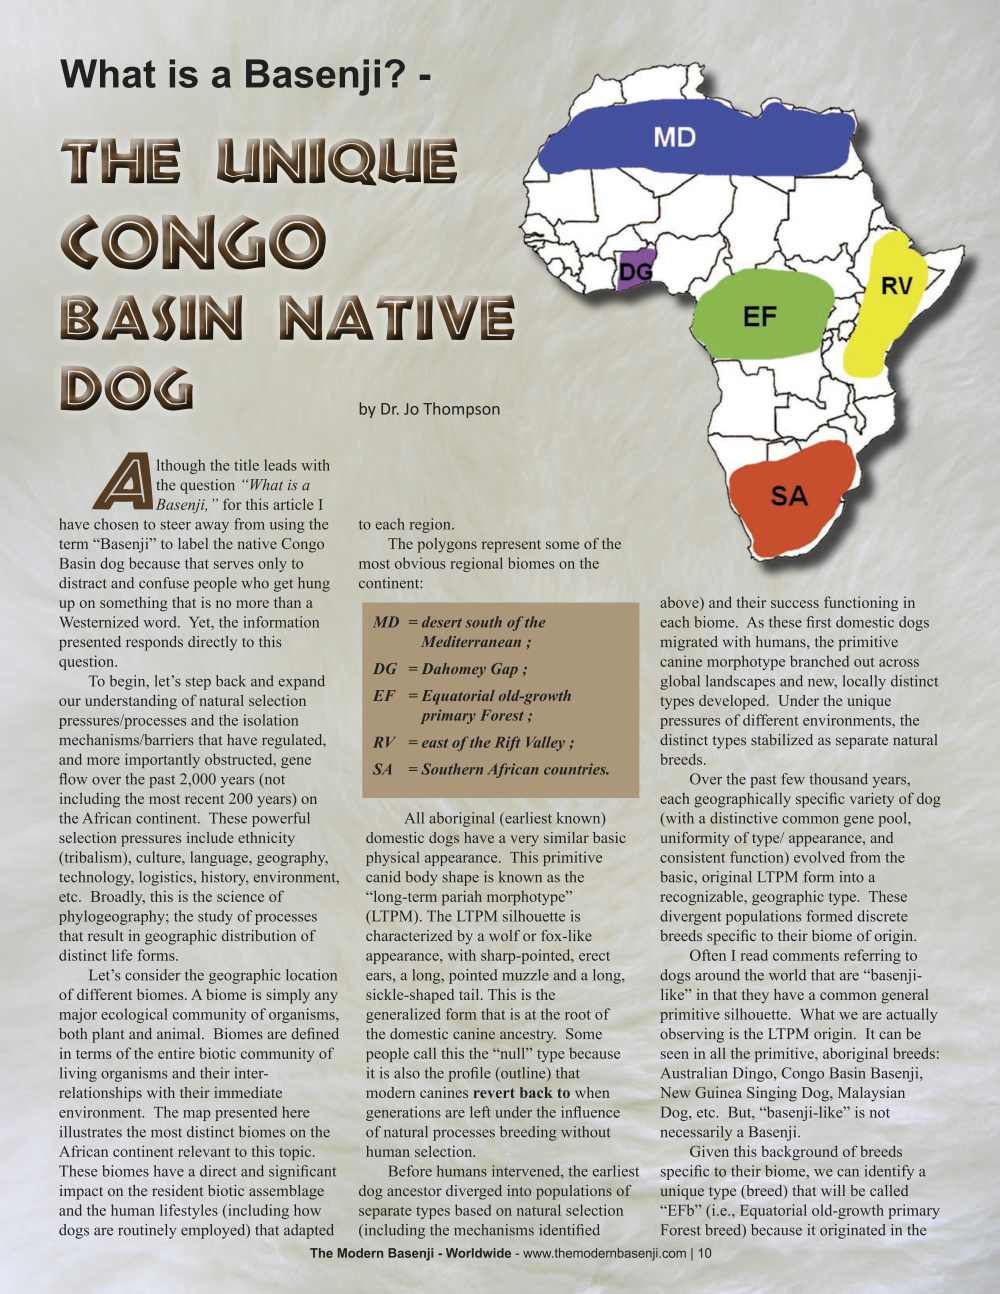 What is Basenji? - The Unique Congo Basin Native Dog